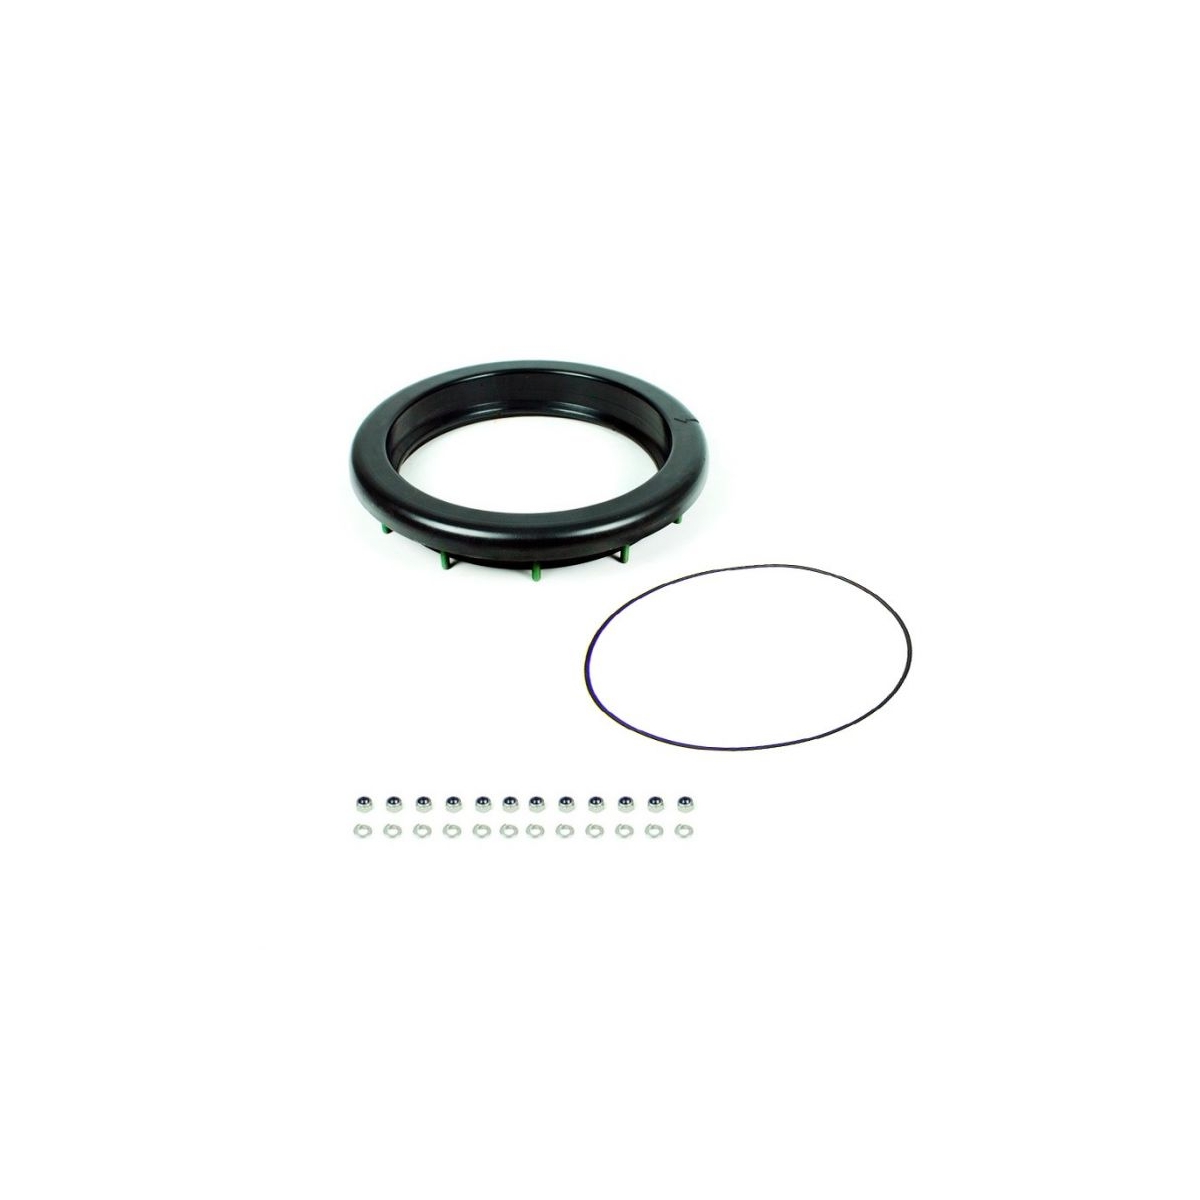 Complete lid ring for Vesuvius/Volcano AstralPool filter